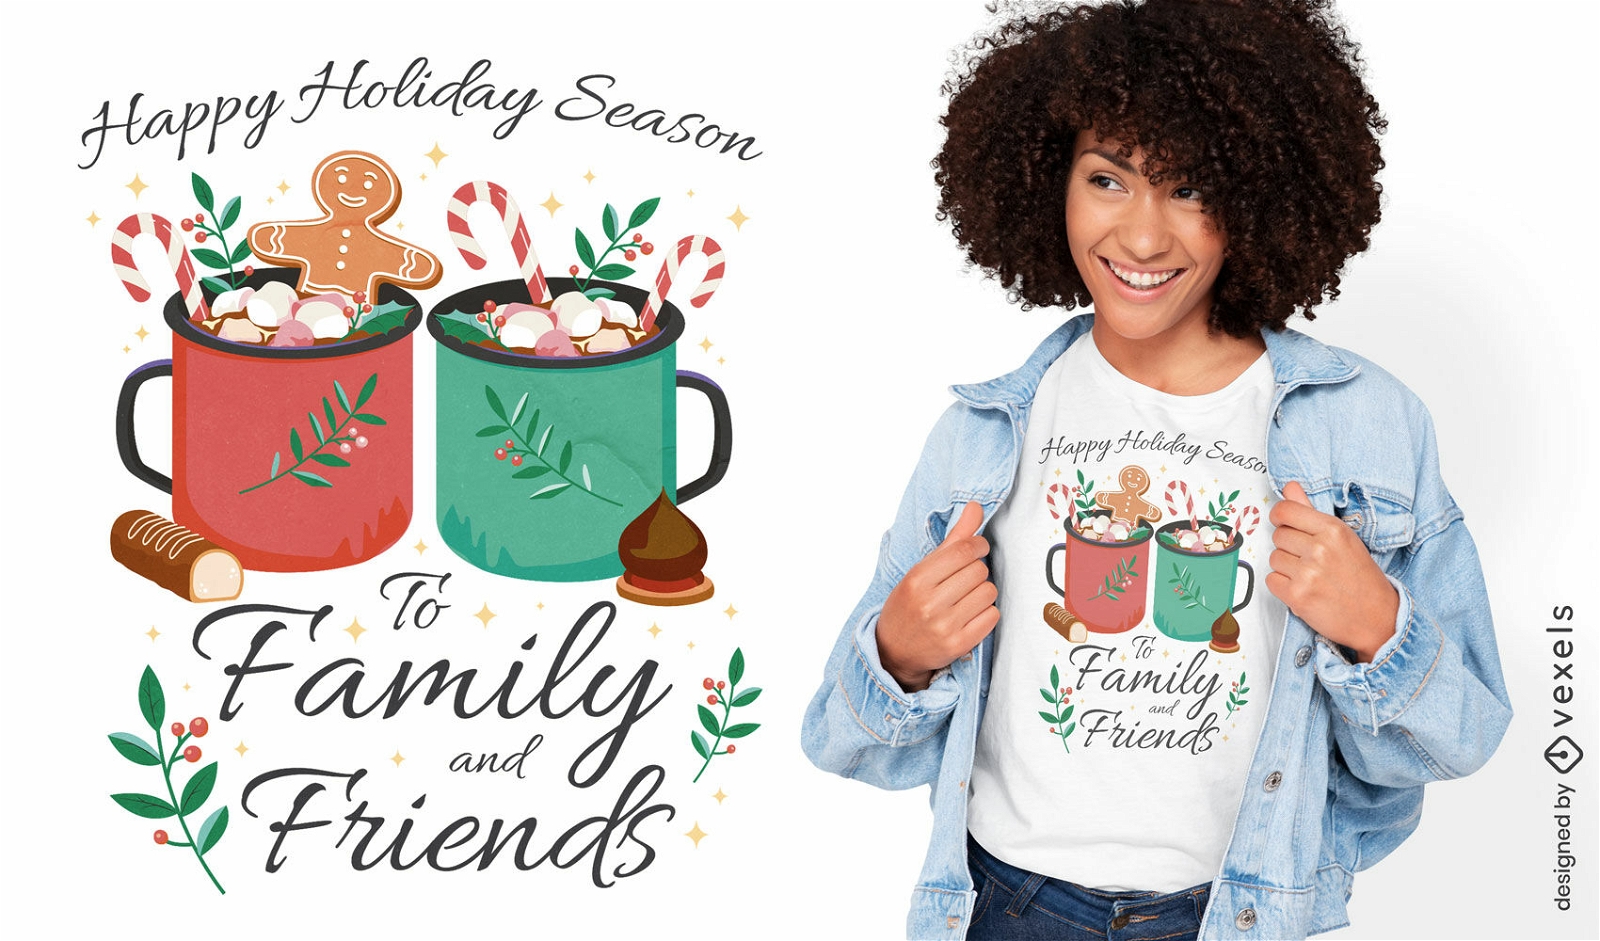 Hot chocolate holiday drinks t-shirt design